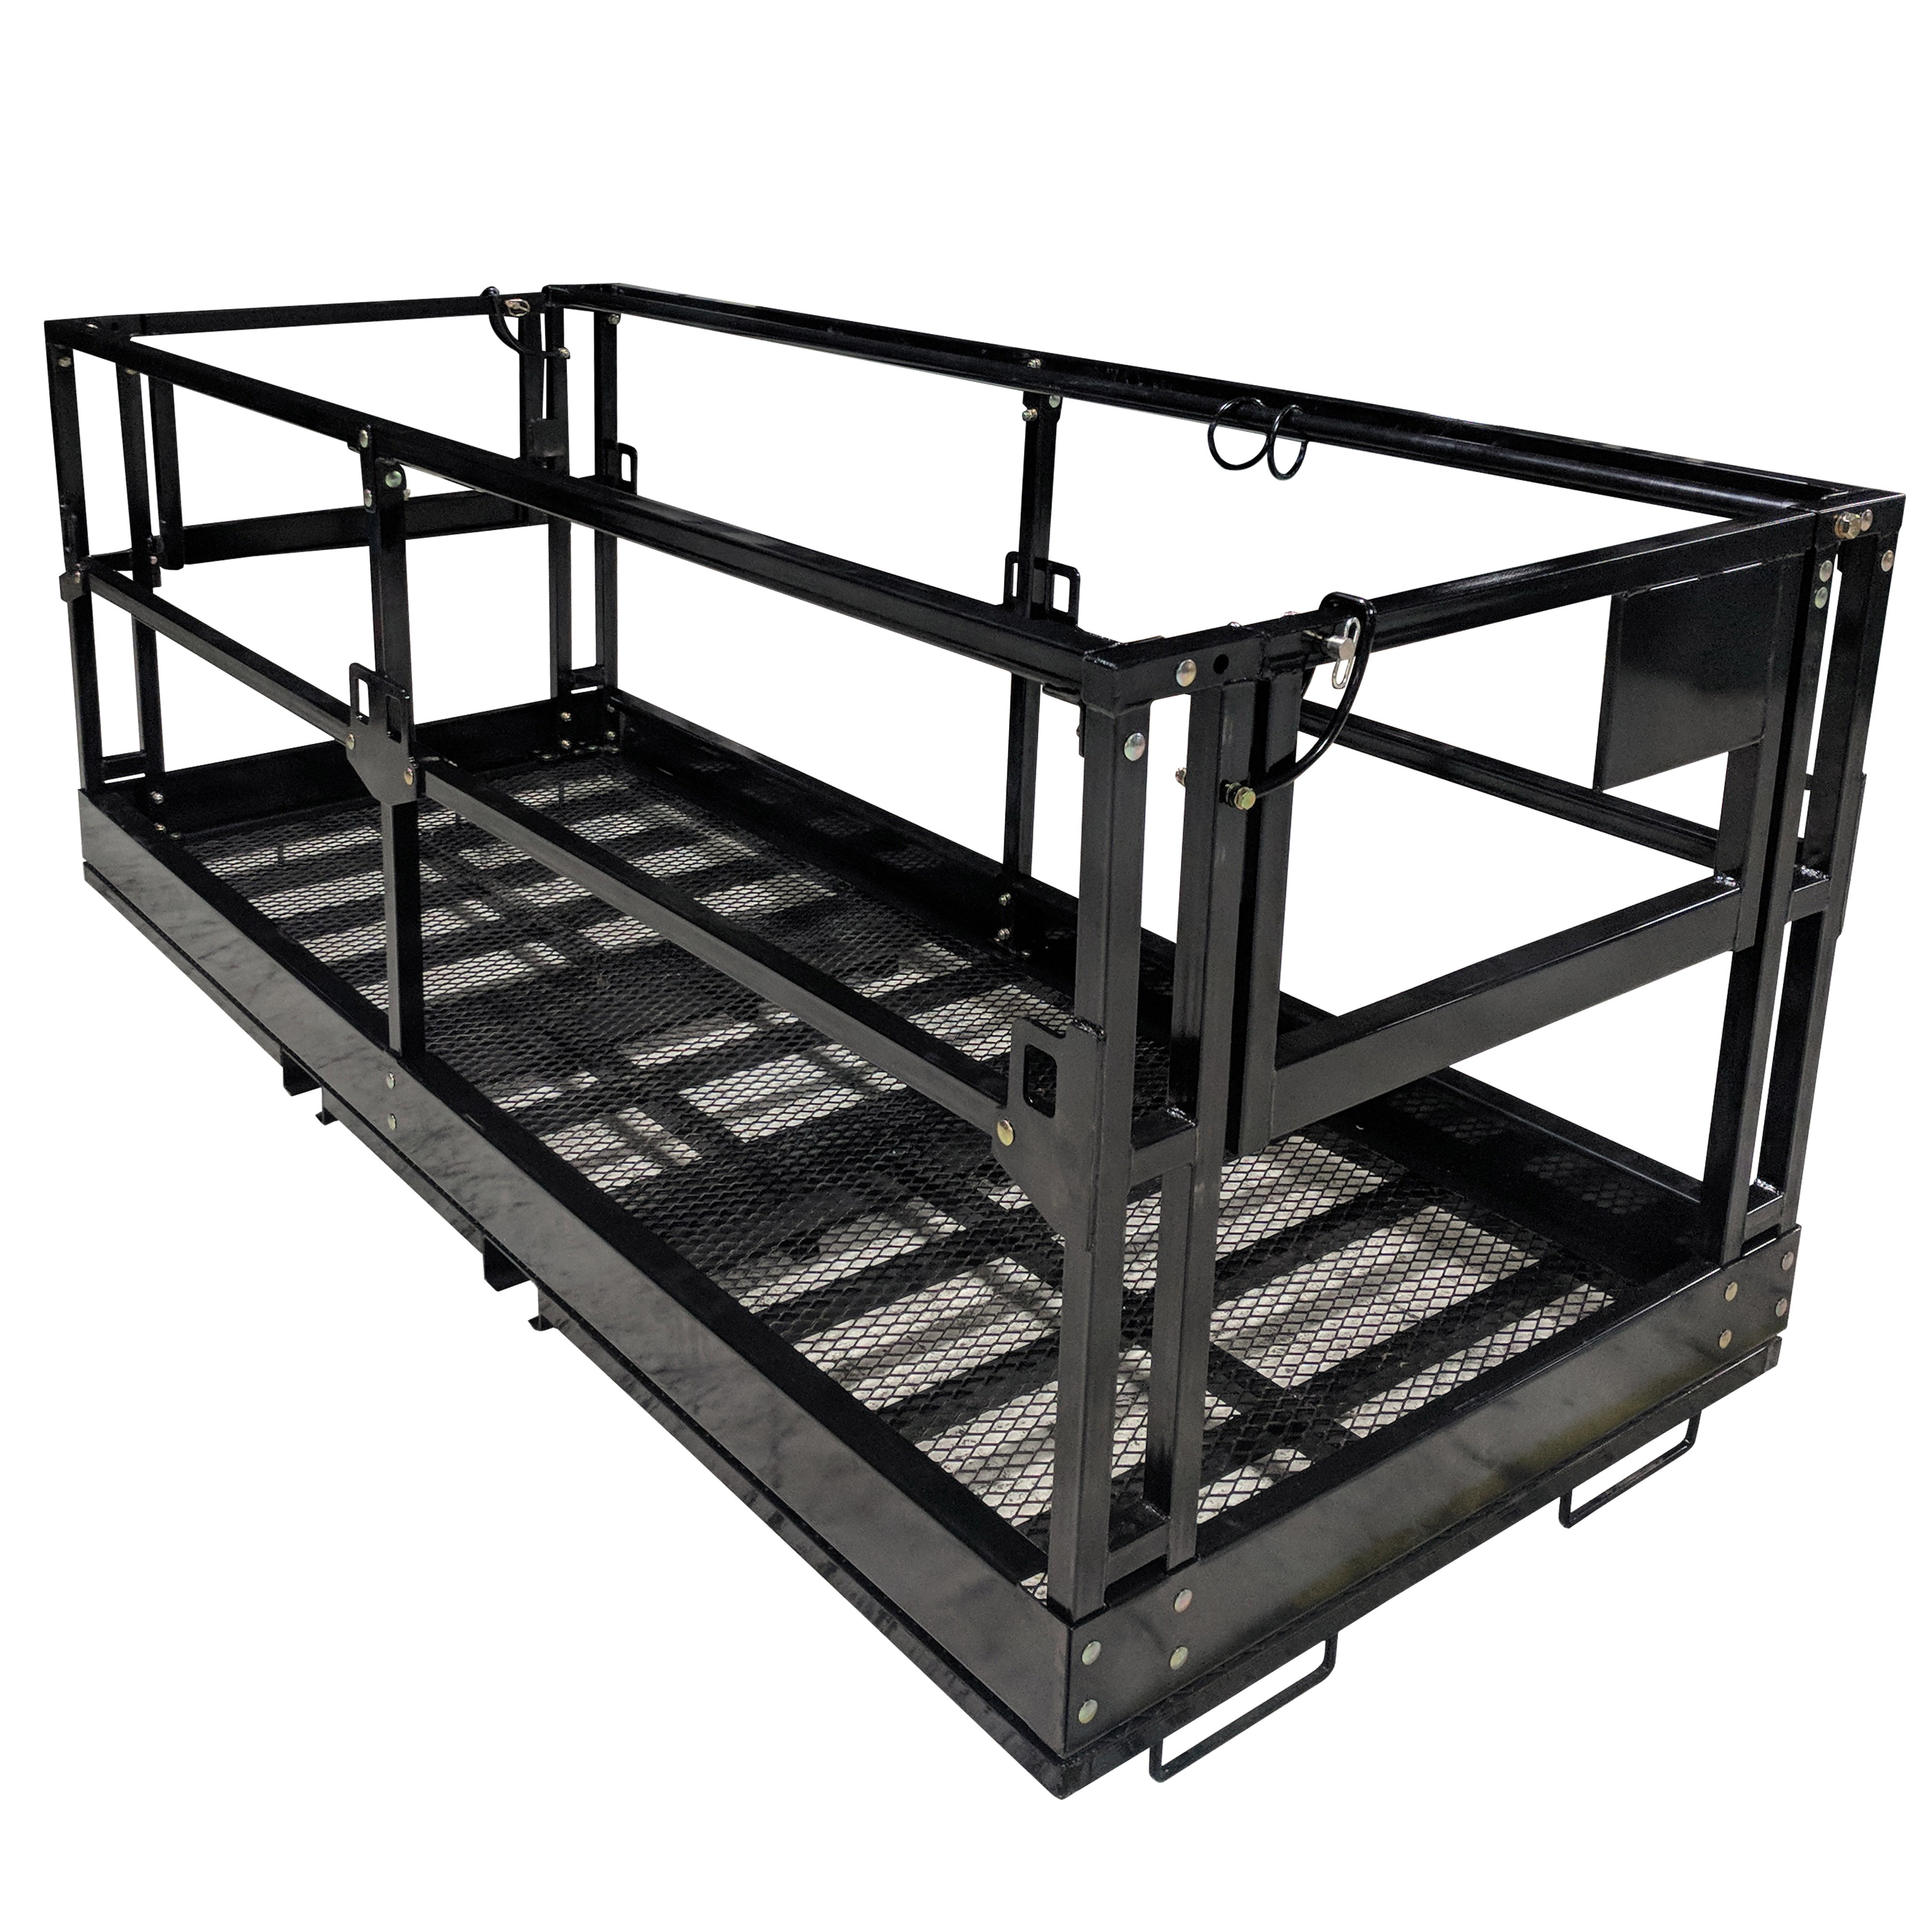 Titan Telehandler Safety Basket Forklift Attachment Safety Cage Work Platform 4ft X 9ft 8in Walmart Com Walmart Com